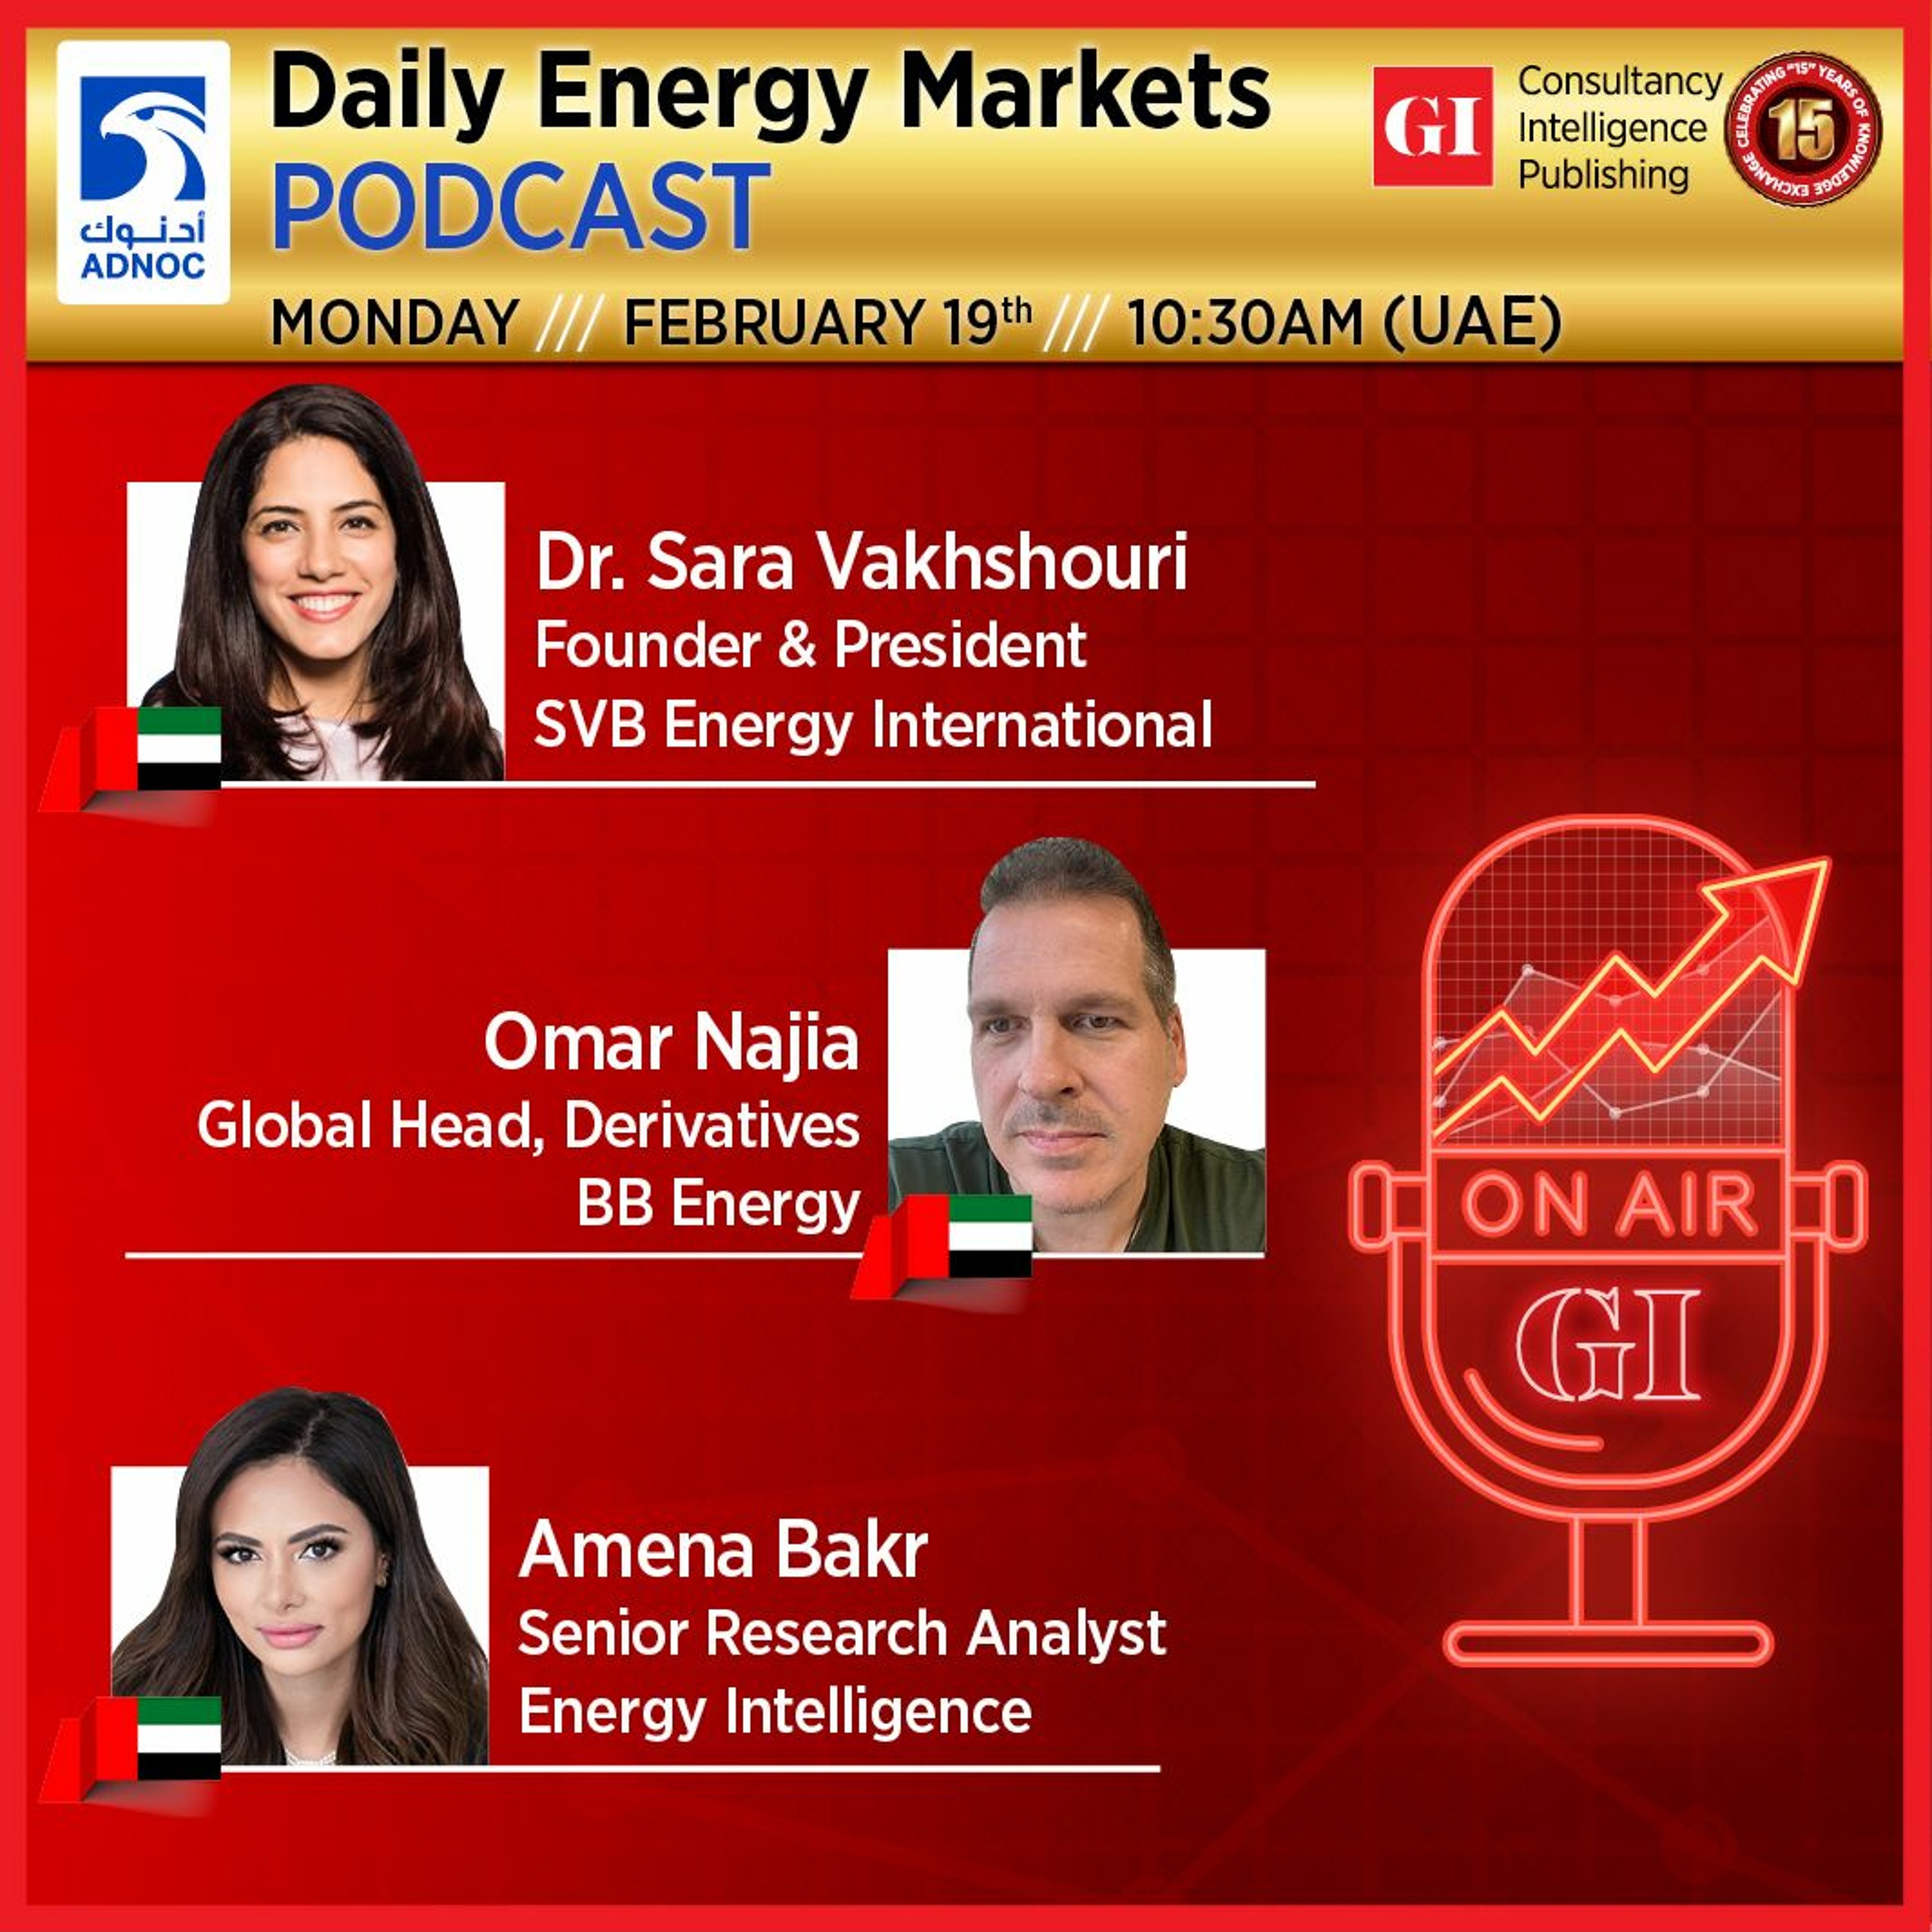 PODCAST: Daily Energy Markets - February 19th